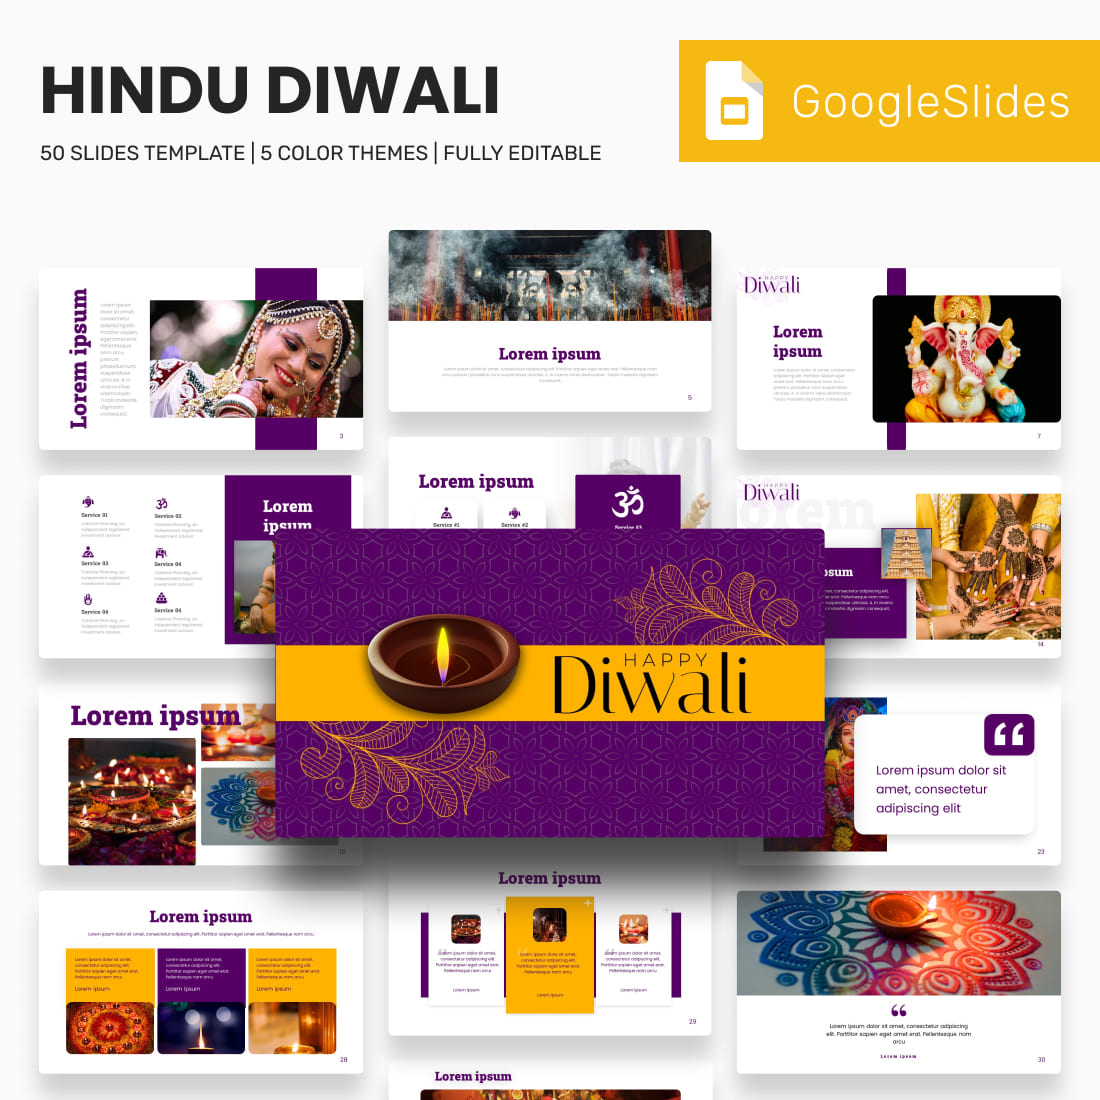 Hindu googleslides template Example.